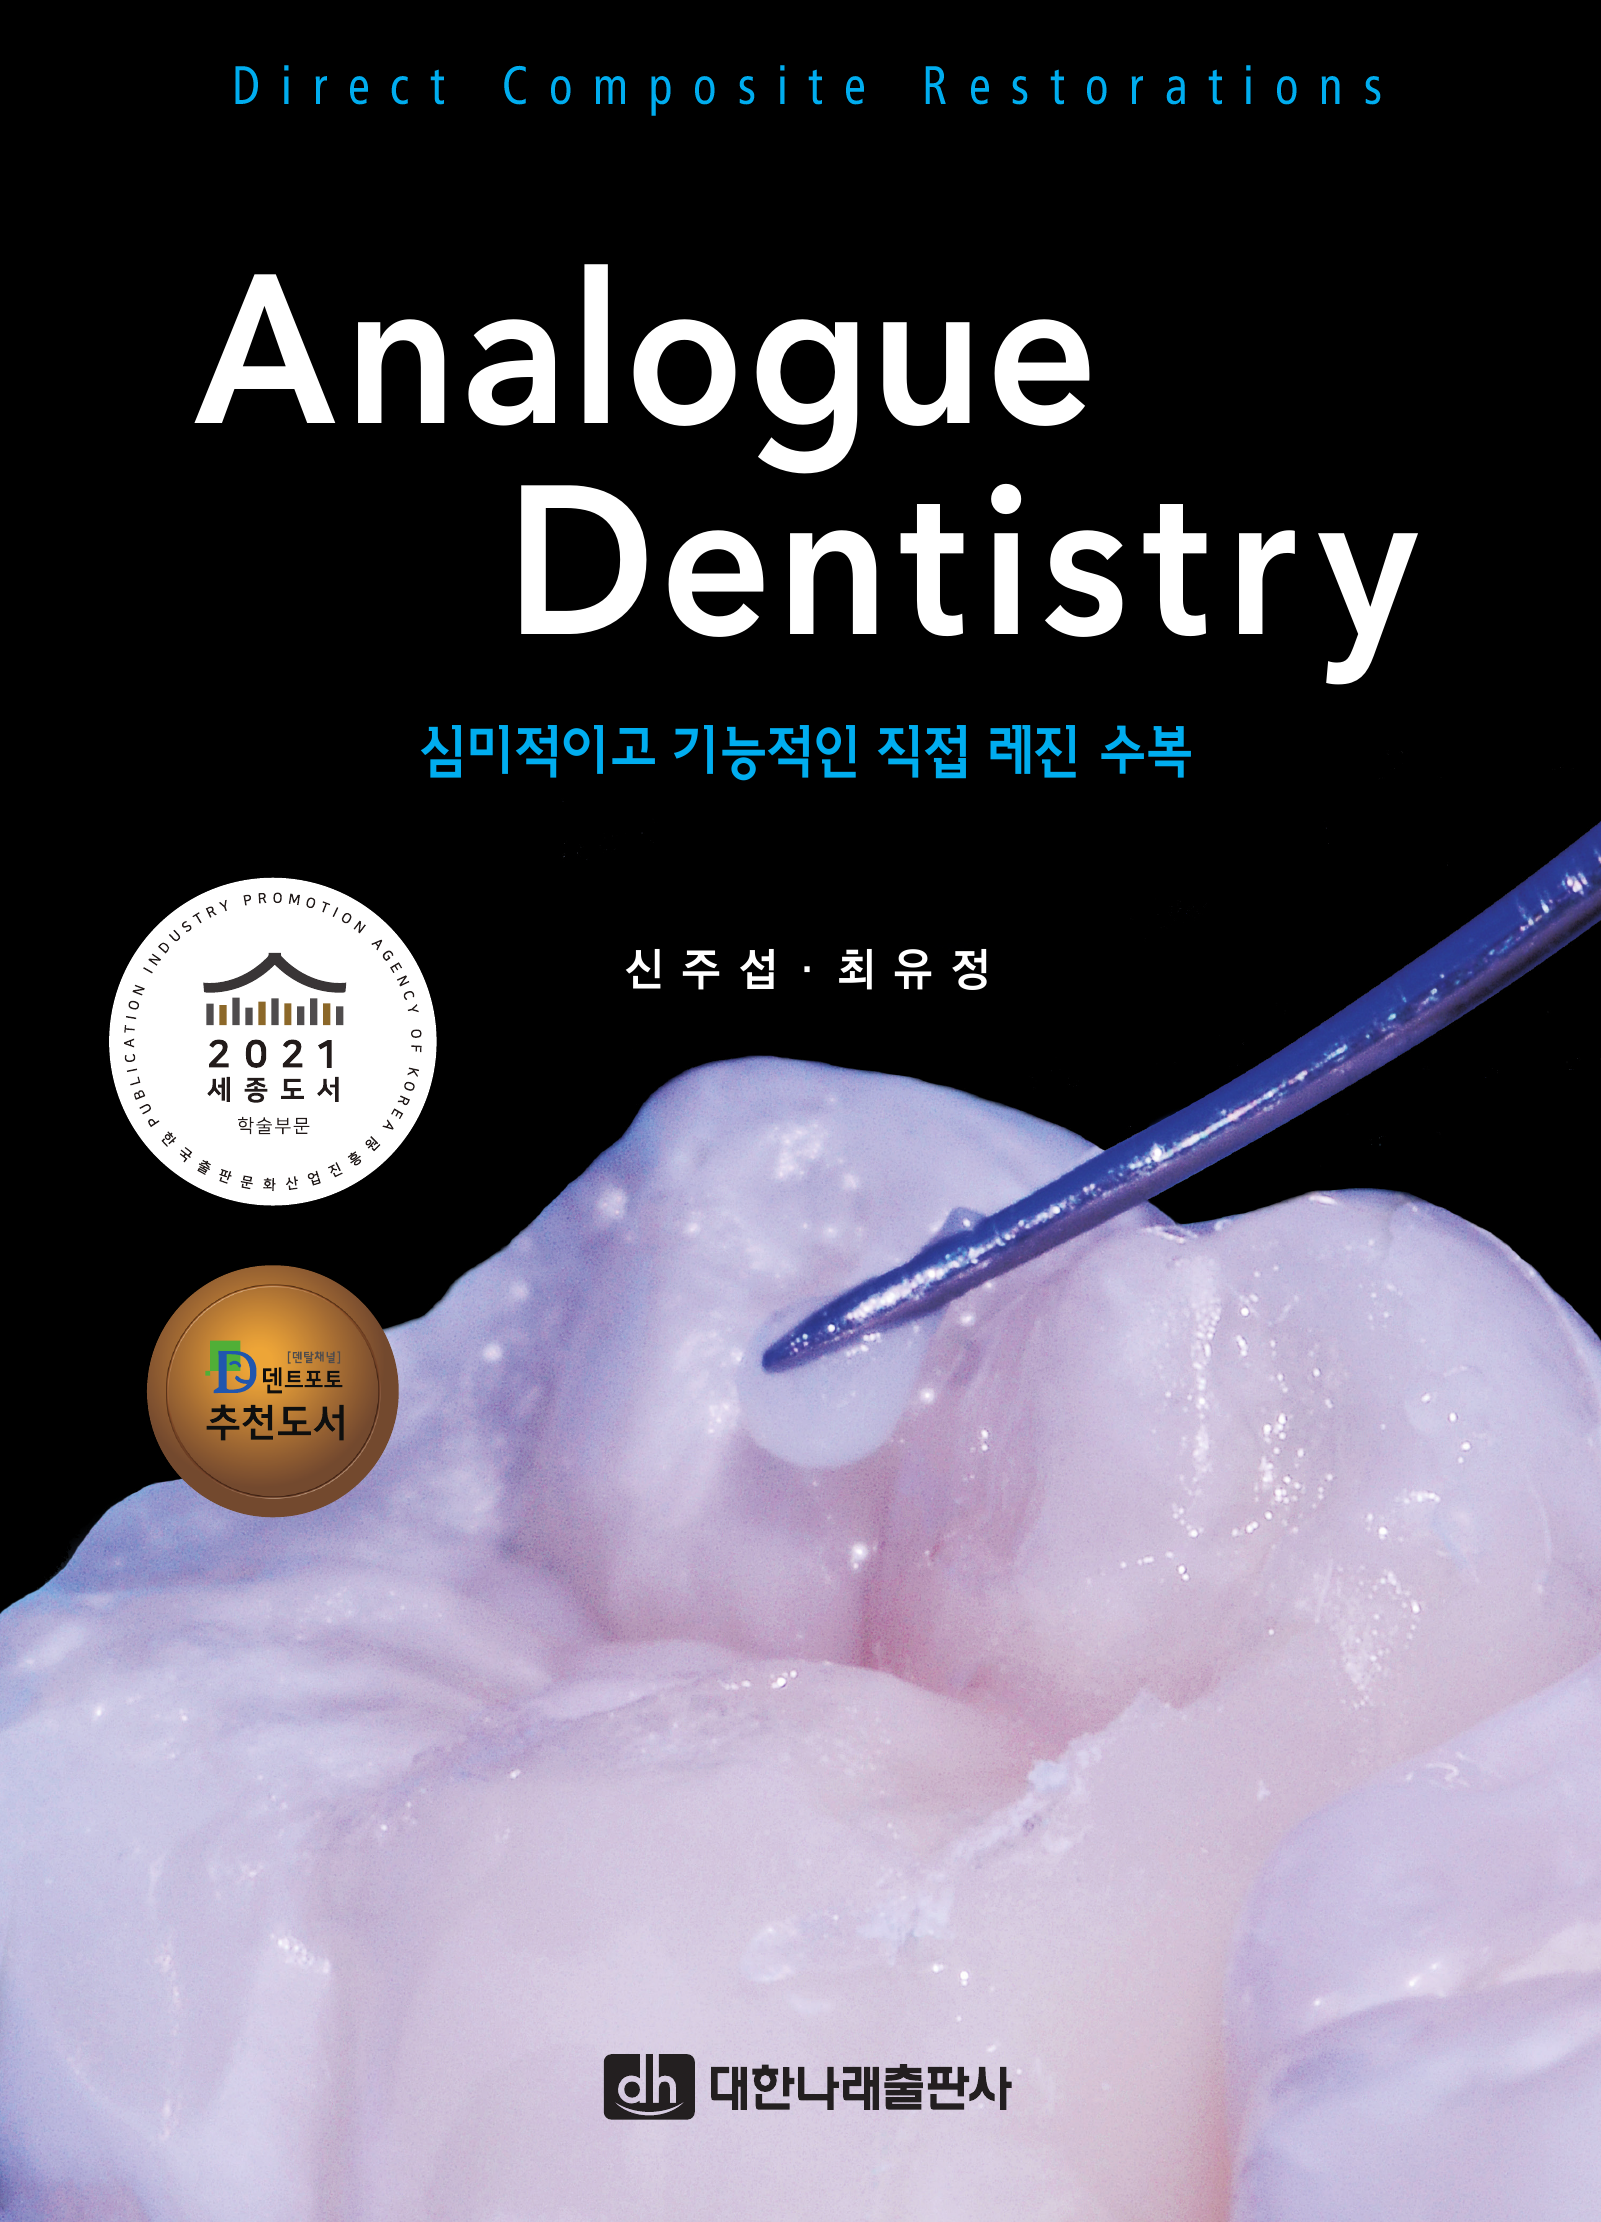 Analogue Dentistry - 심미적이고 기능적인 직접 레진 수복